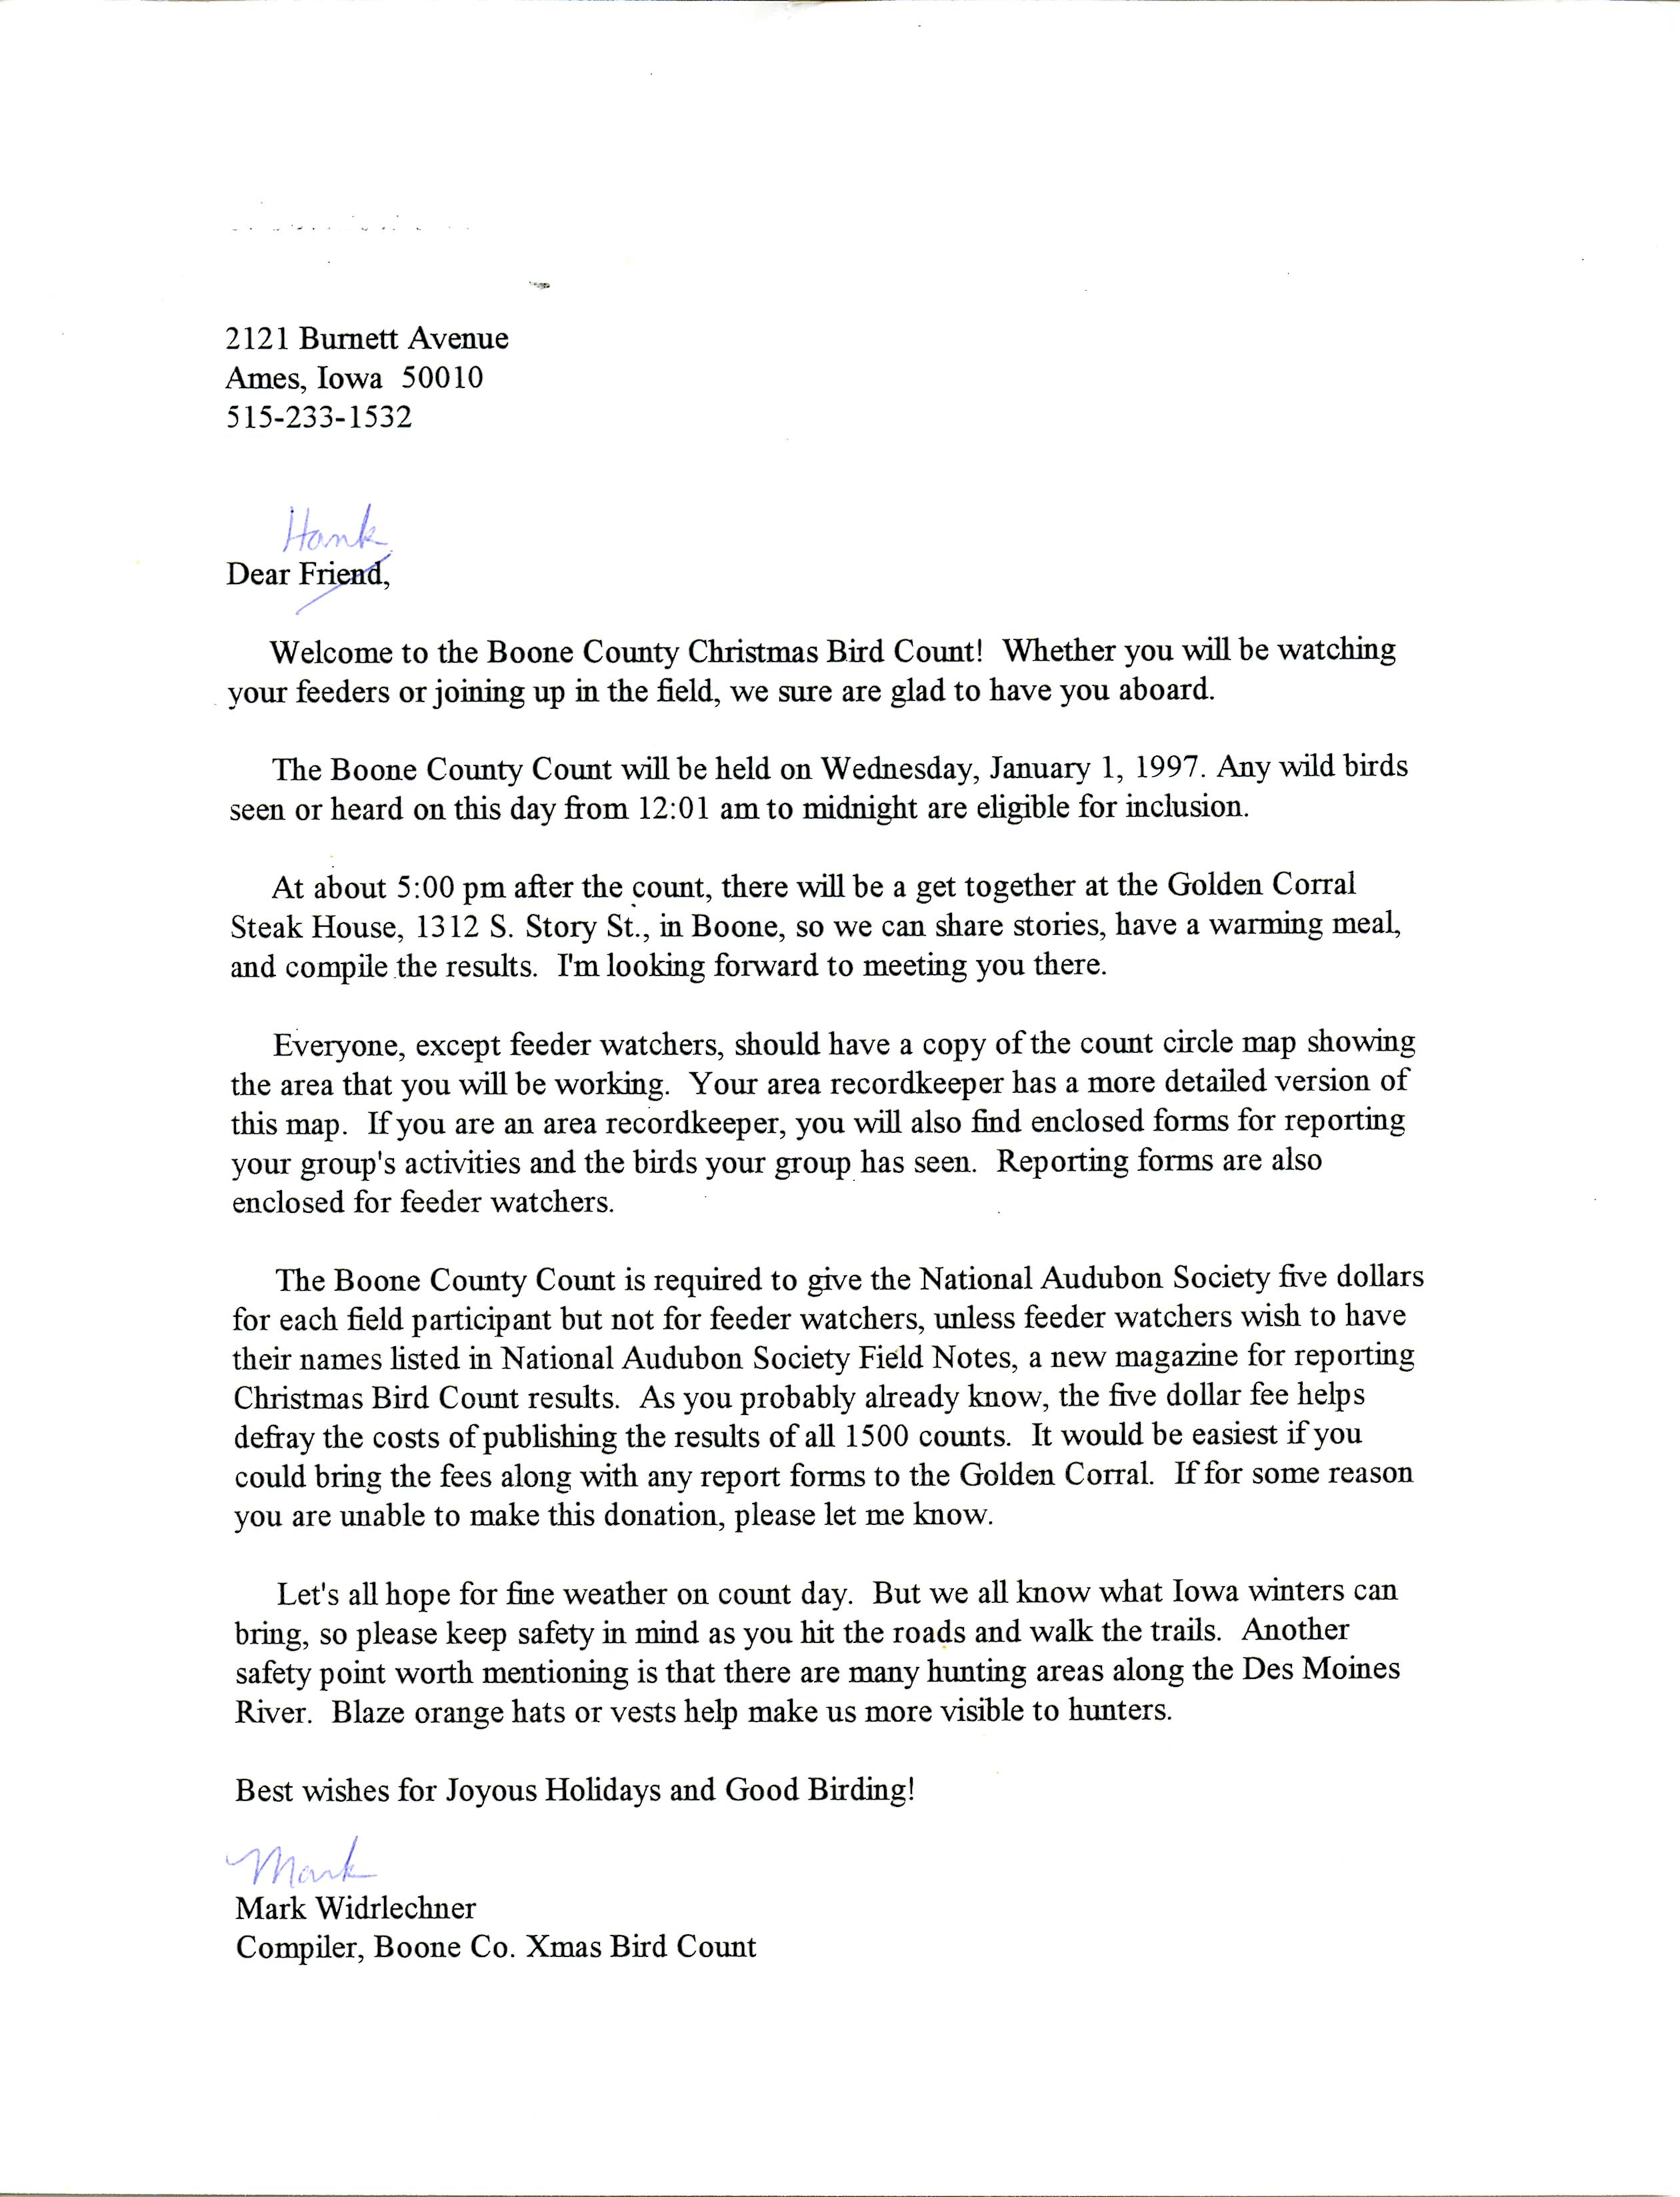 Mark Widrlechner letter to Hank Zaletel regarding the Boone County Christmas Bird Count